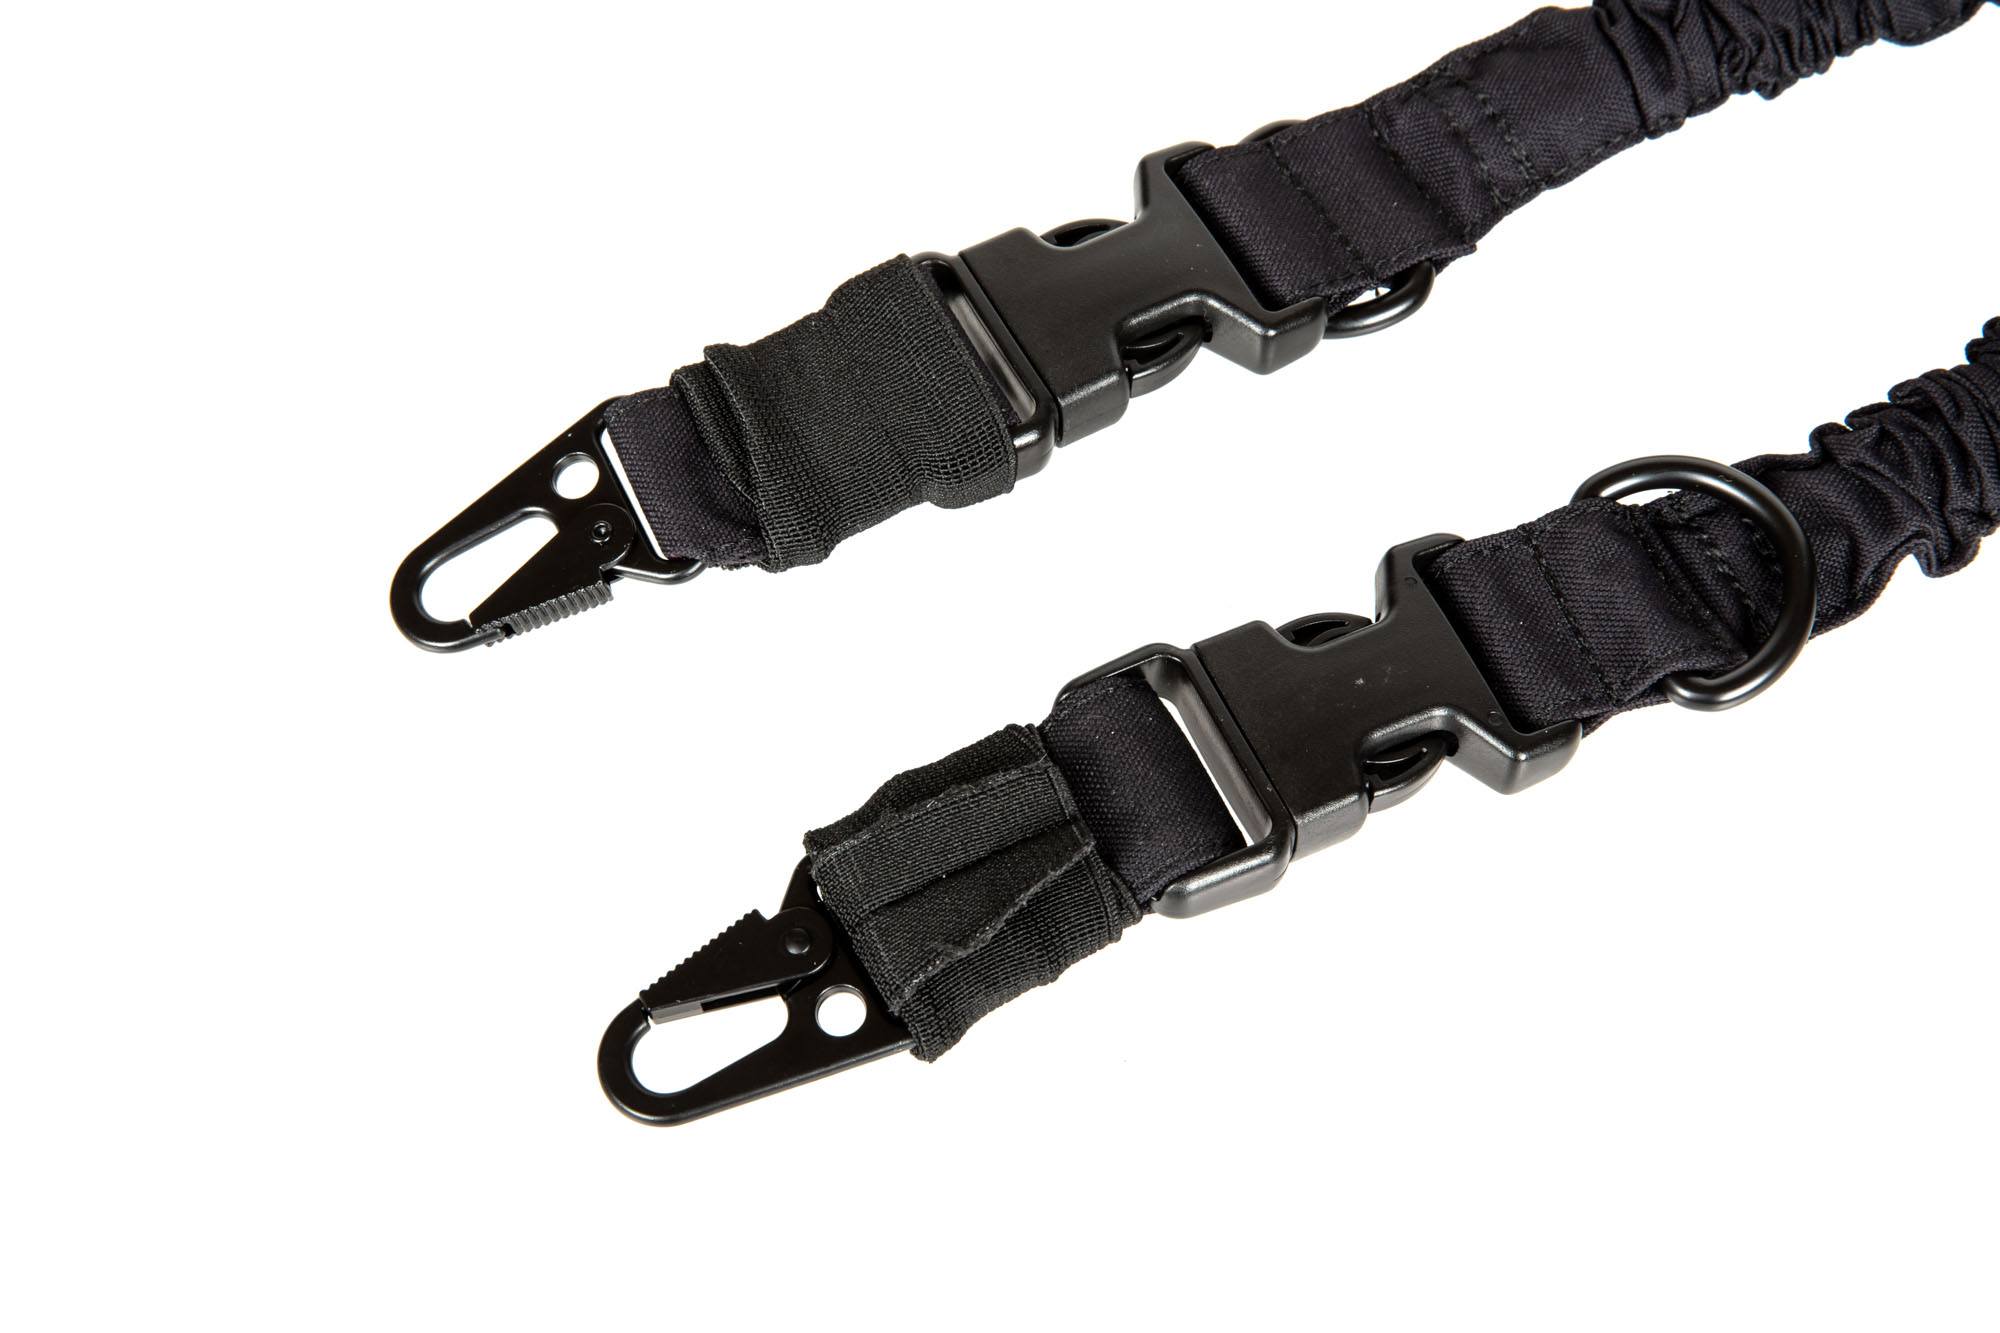 Imbracatura elastica a 2 punti Acodon - Nera